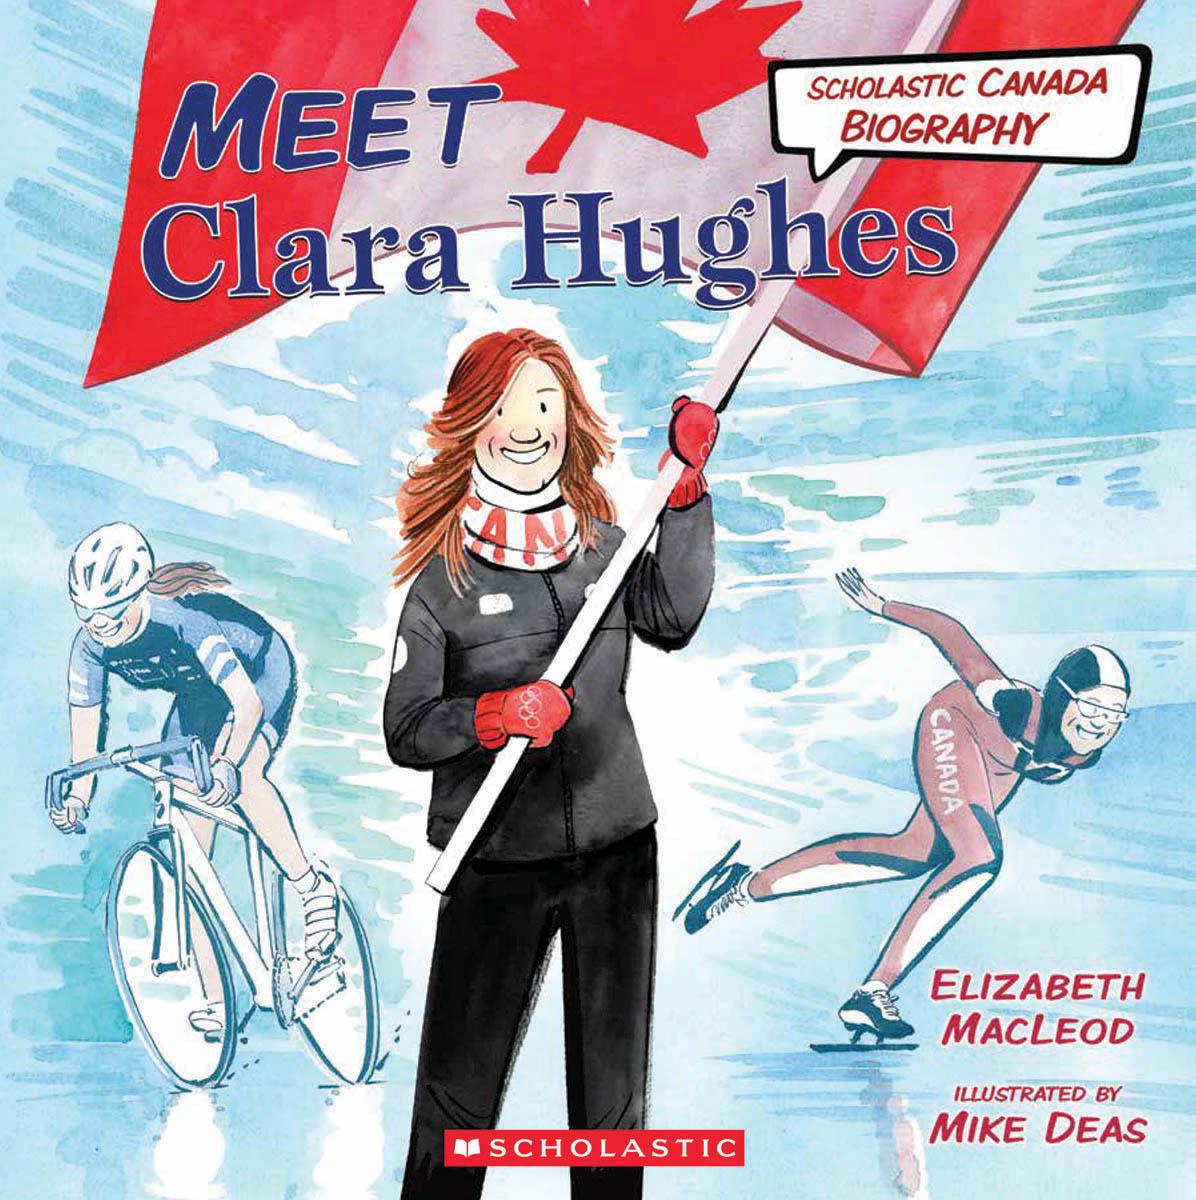  Scholastic Canada Biography: Meet Clara Hughes 